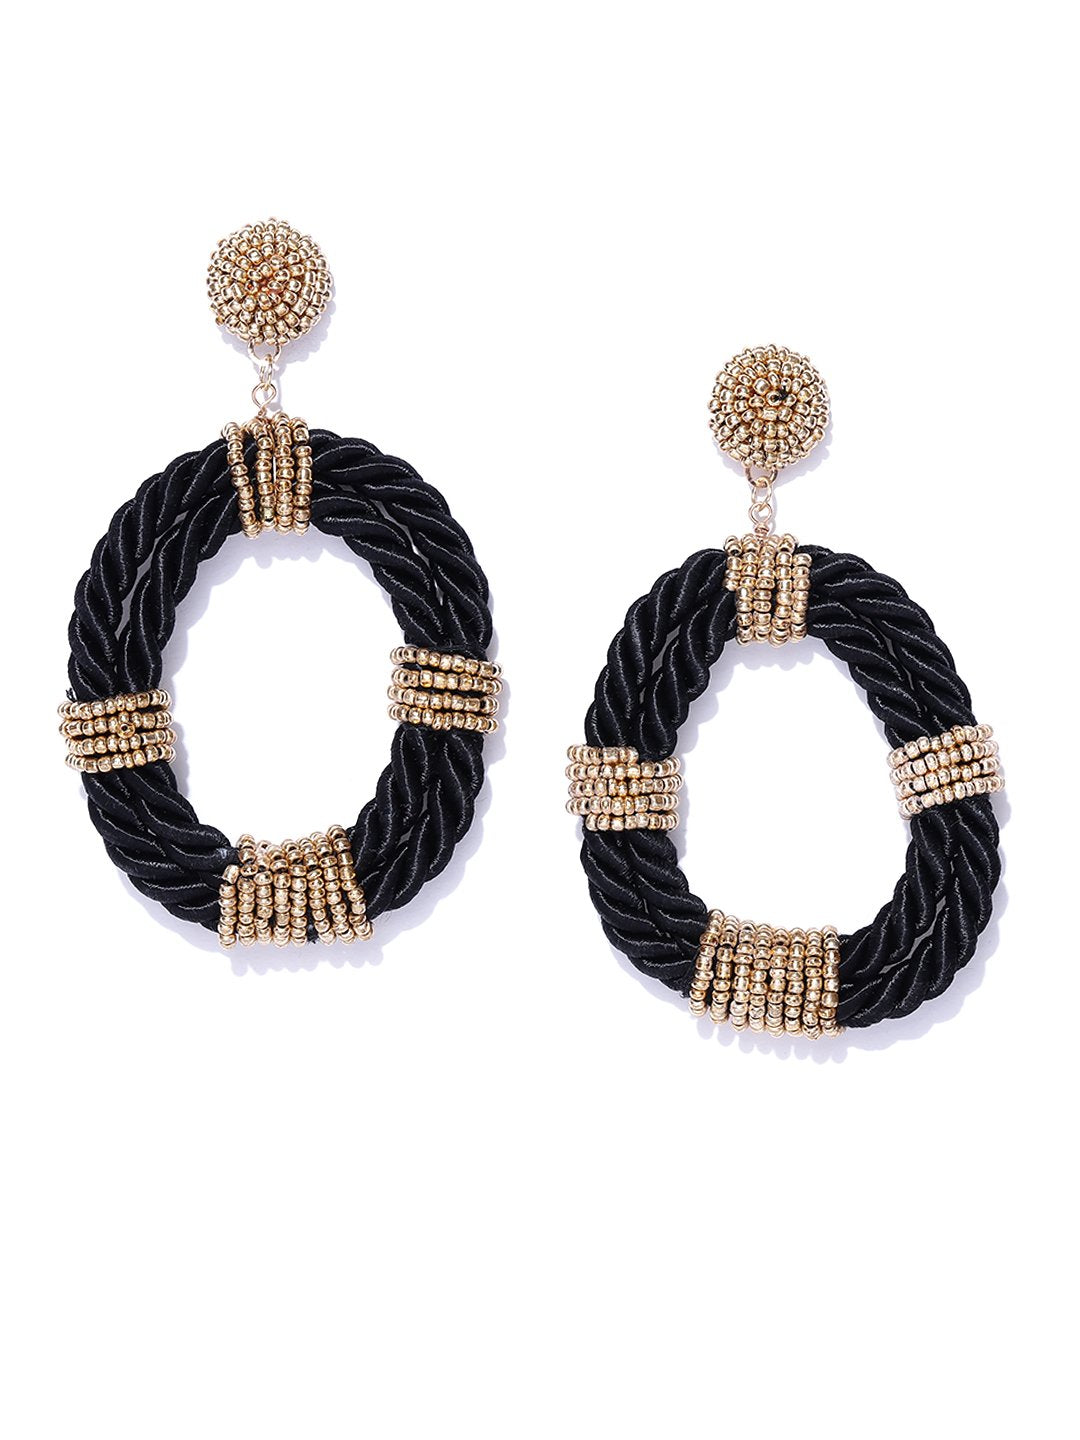 Buy Black And Gold Zircon Drop Earrings Online - W for Woman